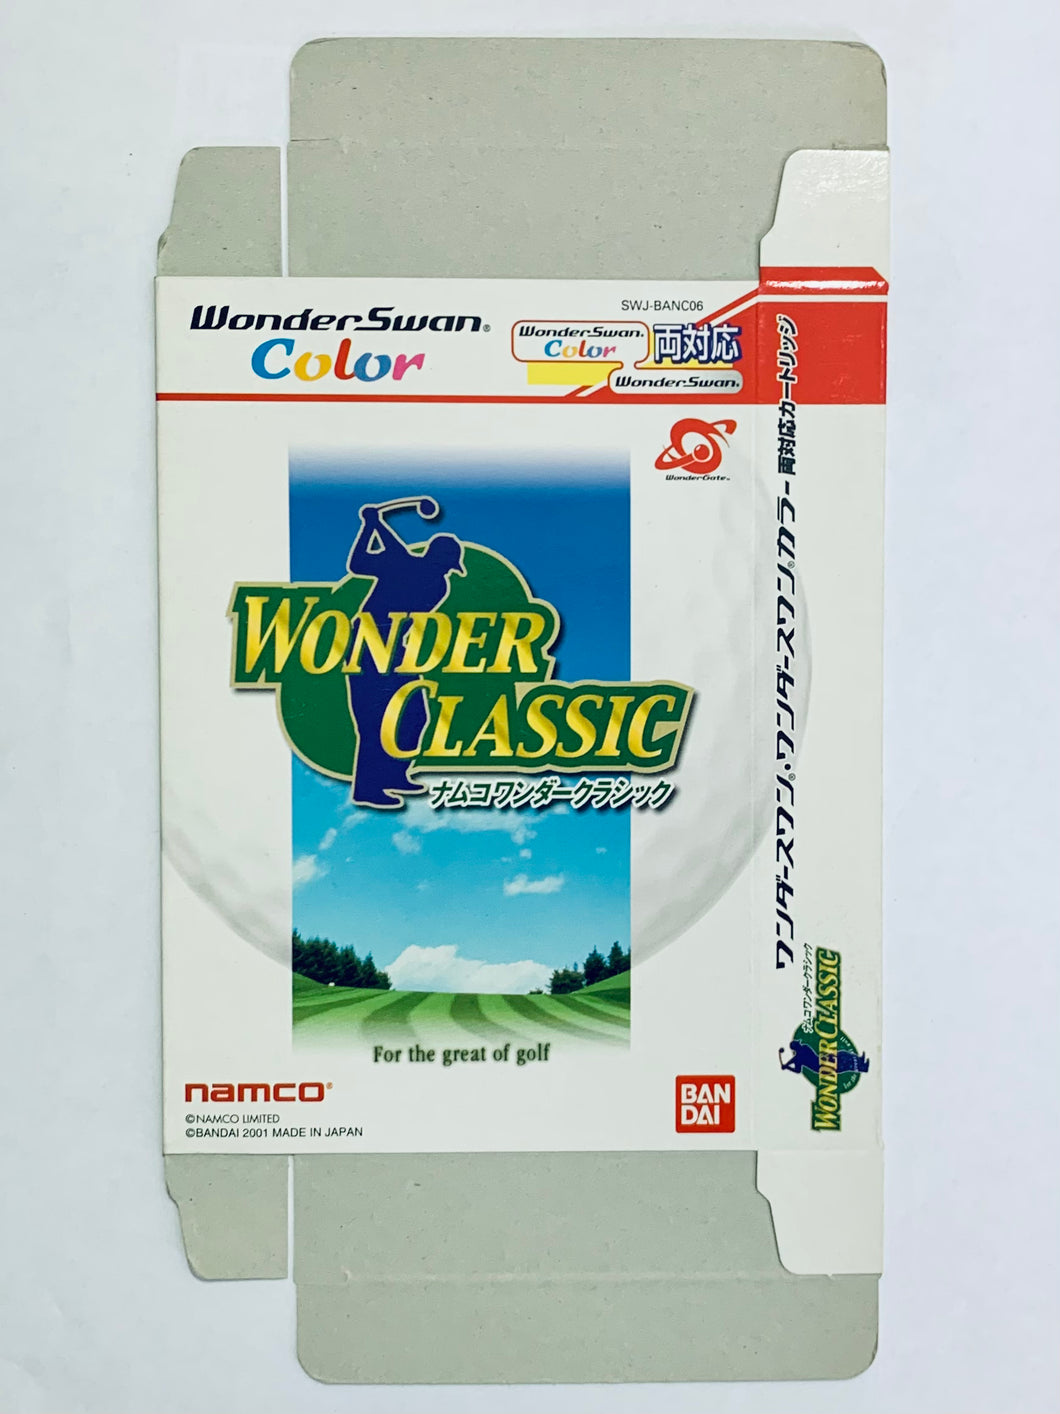 Wonder Classic - WonderSwan Color - WSC - JP - Box Only (SWJ-BANC06)